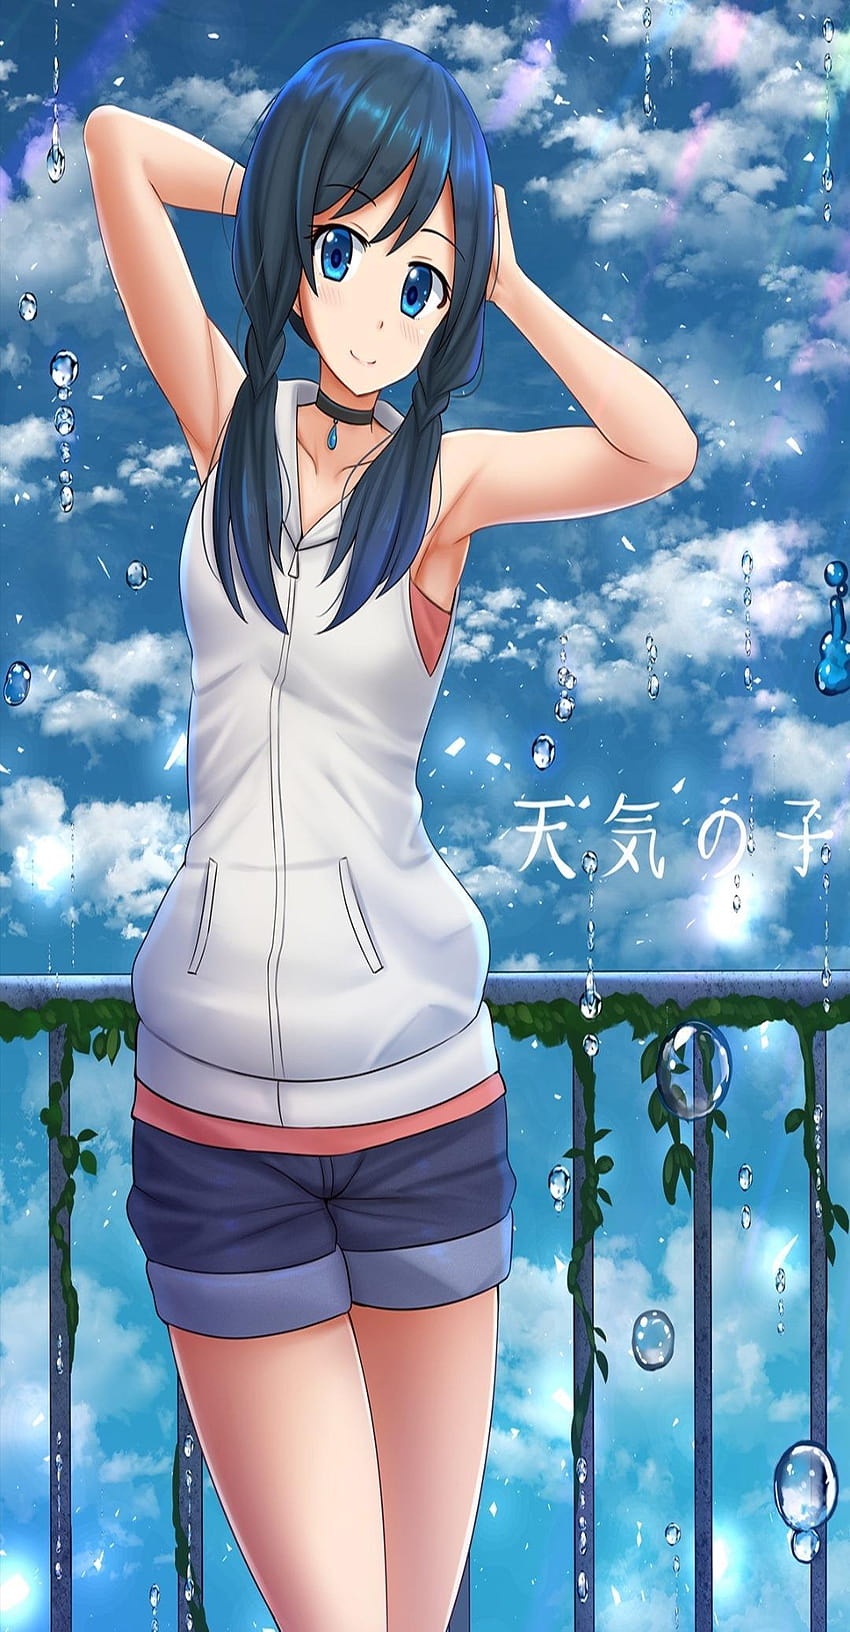 Weathering With You Anime สำหรับ Android พยากรณ์อากาศบนมือถือกับคุณ วอลล์เปเปอร์โทรศัพท์ HD